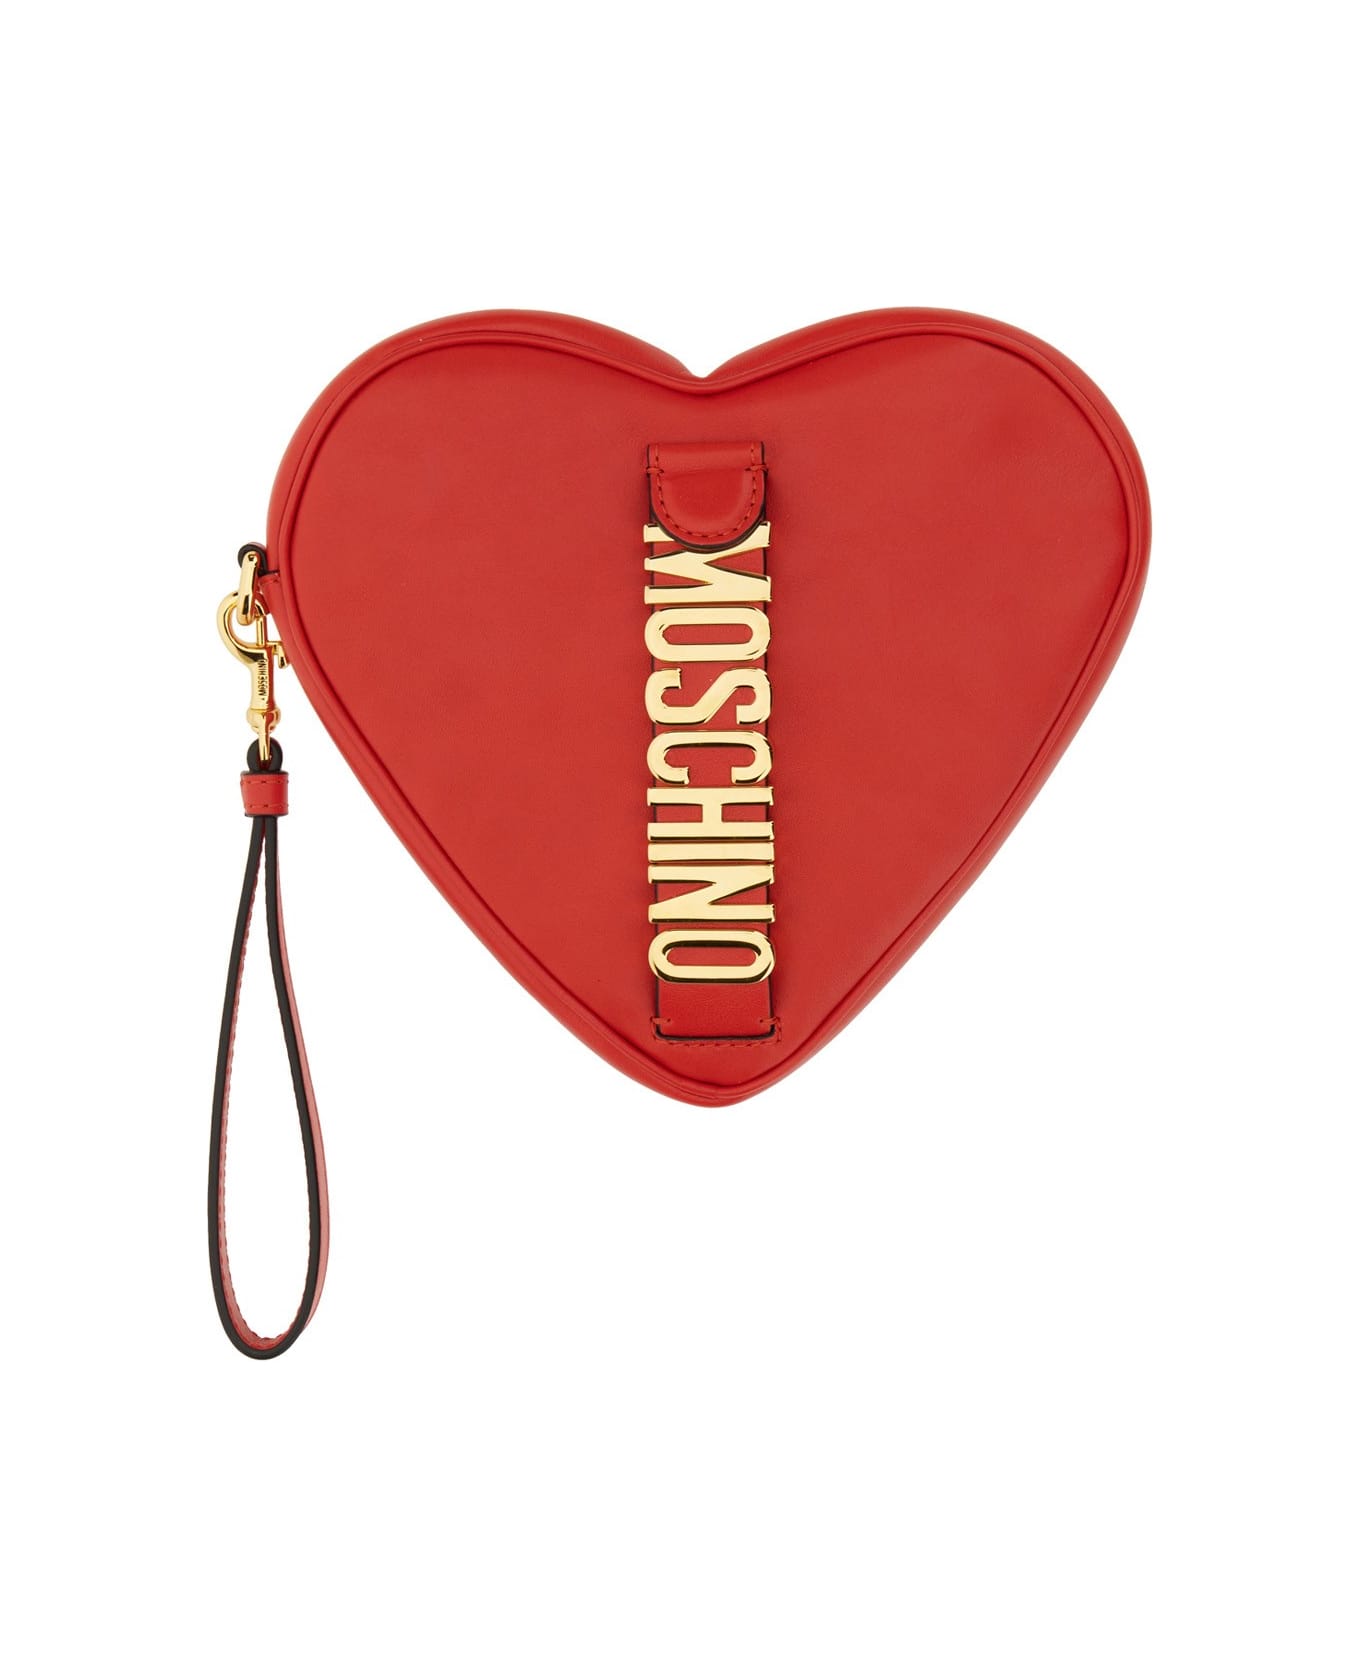 Moschino Heart Clutch Bag - ROSSO